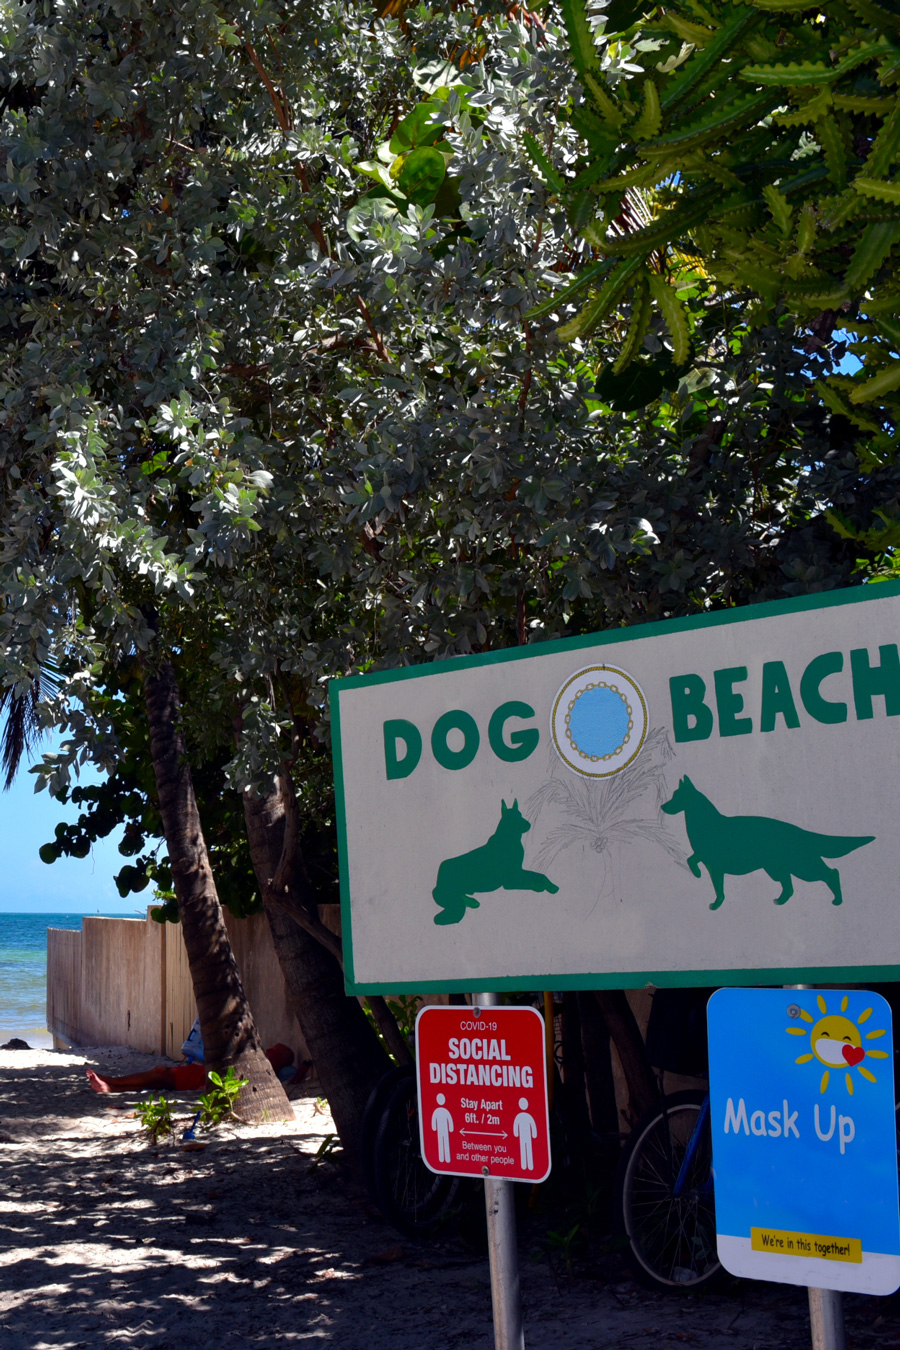 Dog Beach, on the Atlantic Ocean in Key West, Florida